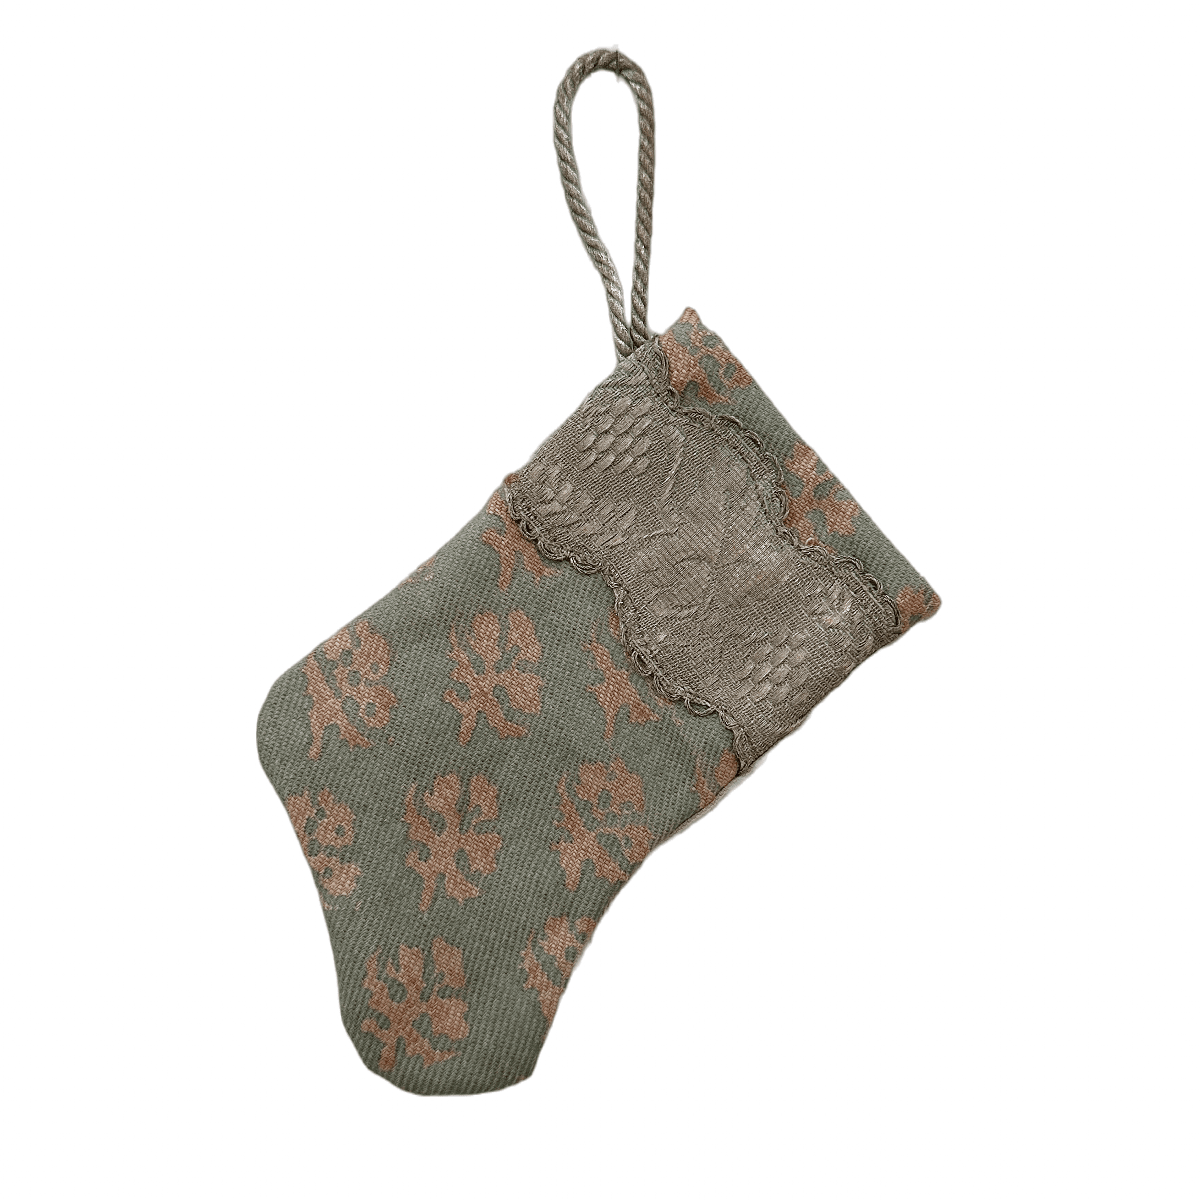 Handmade Mini Stocking Ornament from Antique & Vintage Textiles, Trims | Mint Fortuny Ornament B. Viz Design E 